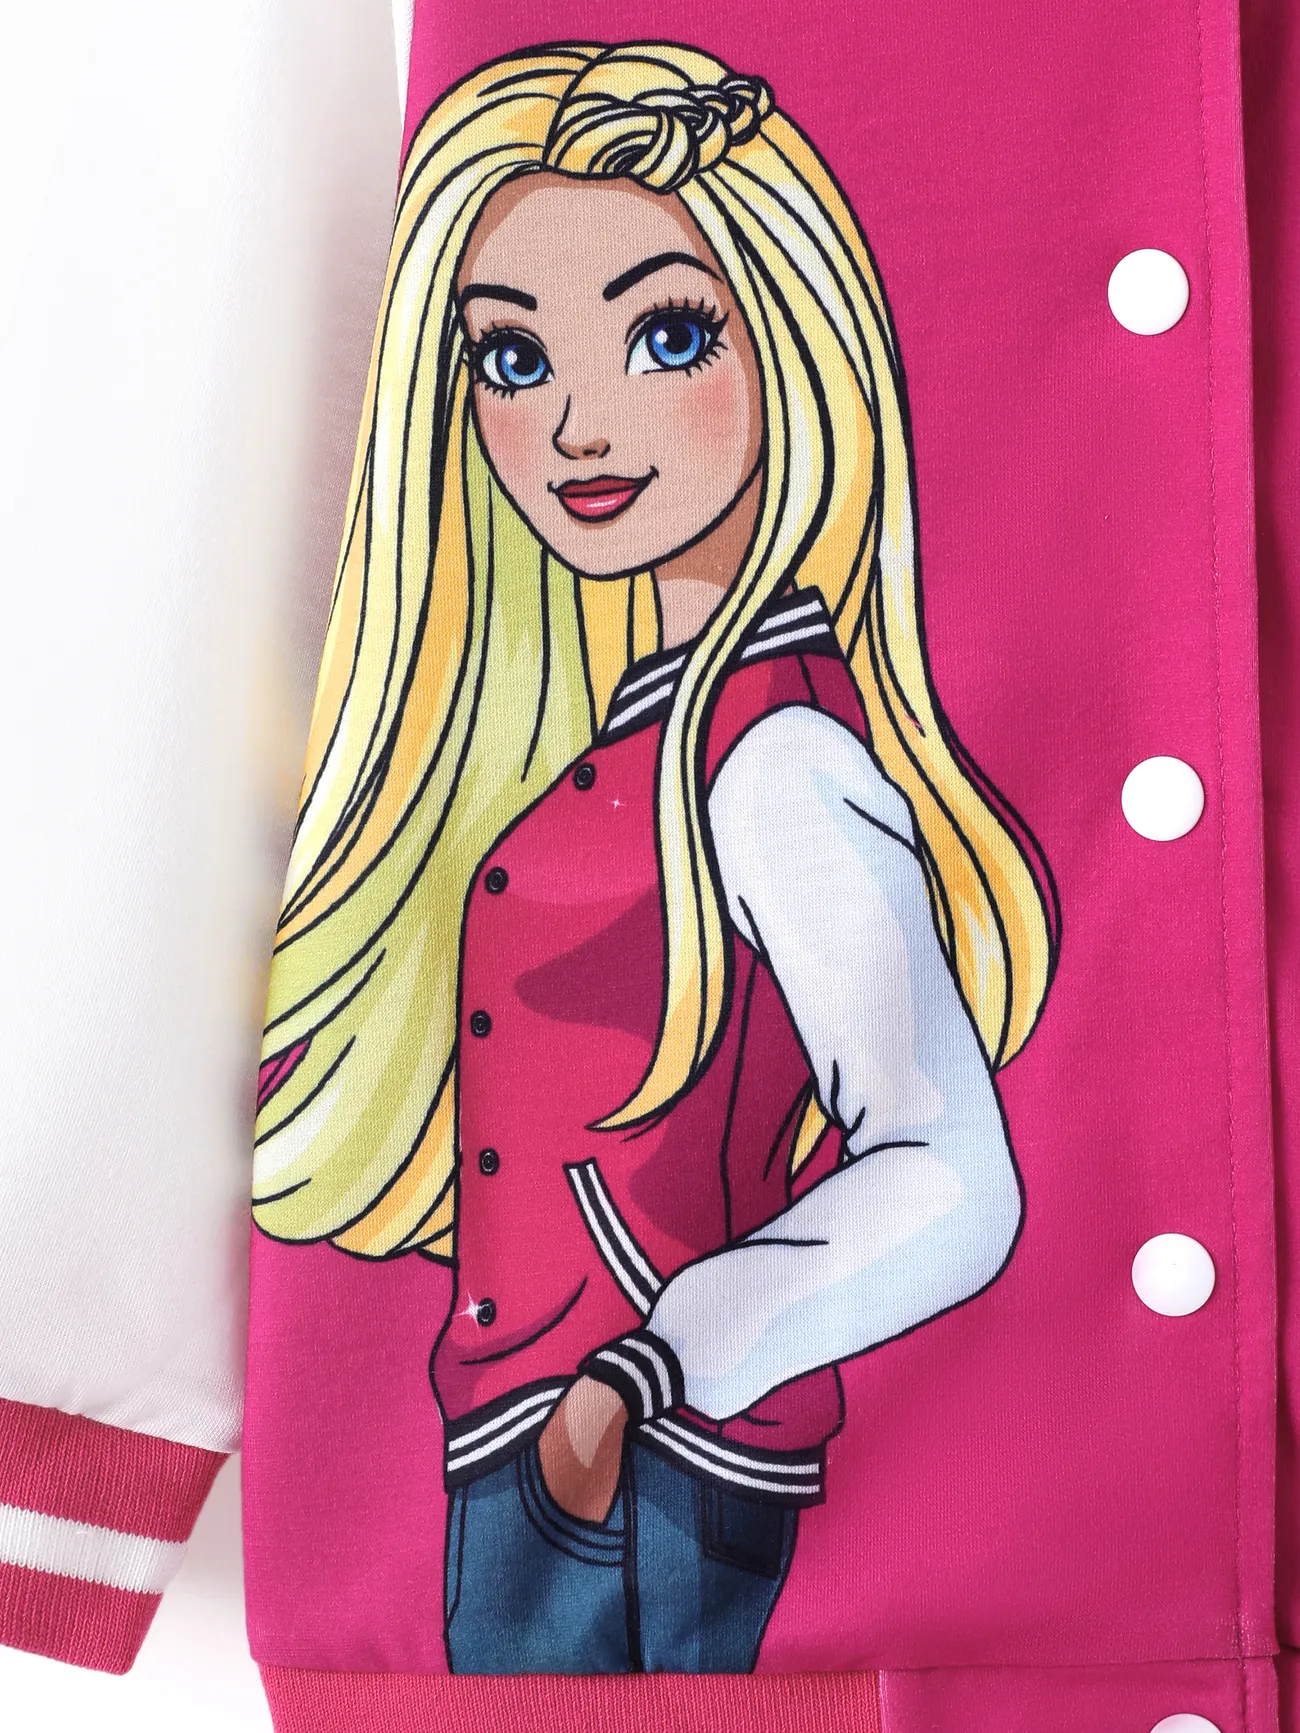 Barbie Toddler / Crianças Meninas Naia™ Carta Print Colorblock Jaqueta Bomber Leve Roseo big image 1